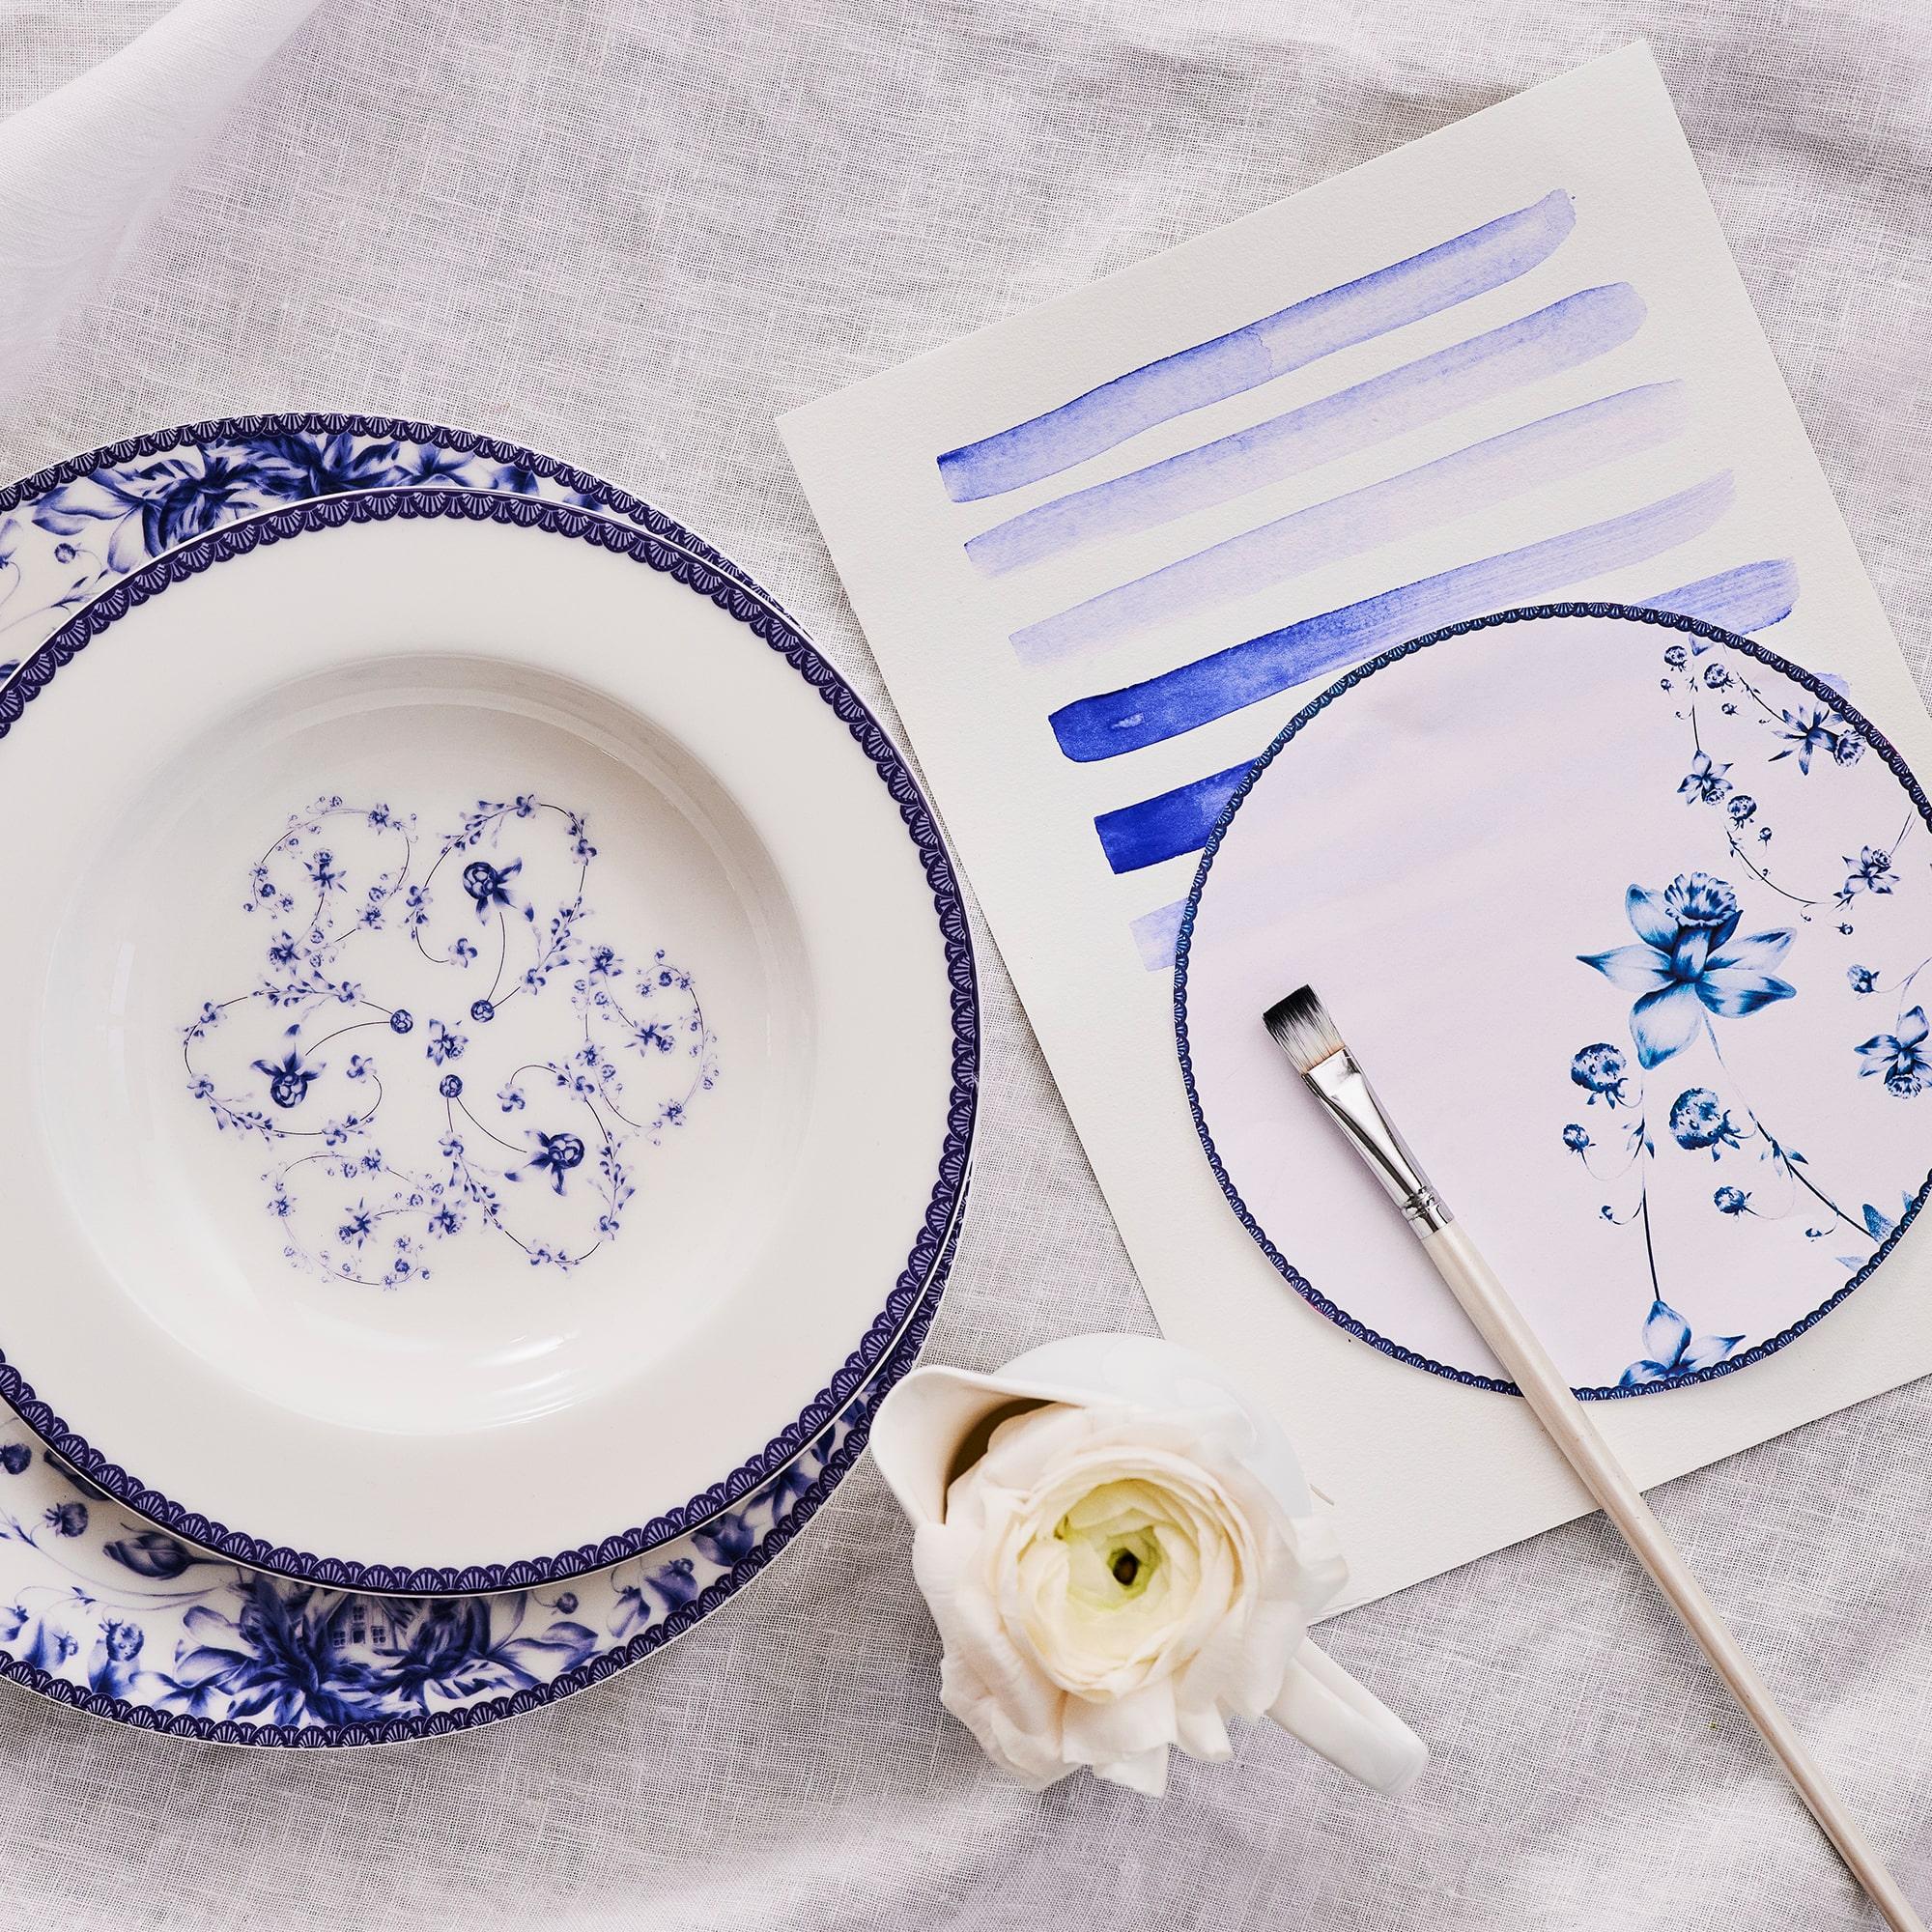 6-Inch Floral Porcelain Plate - Set of Six